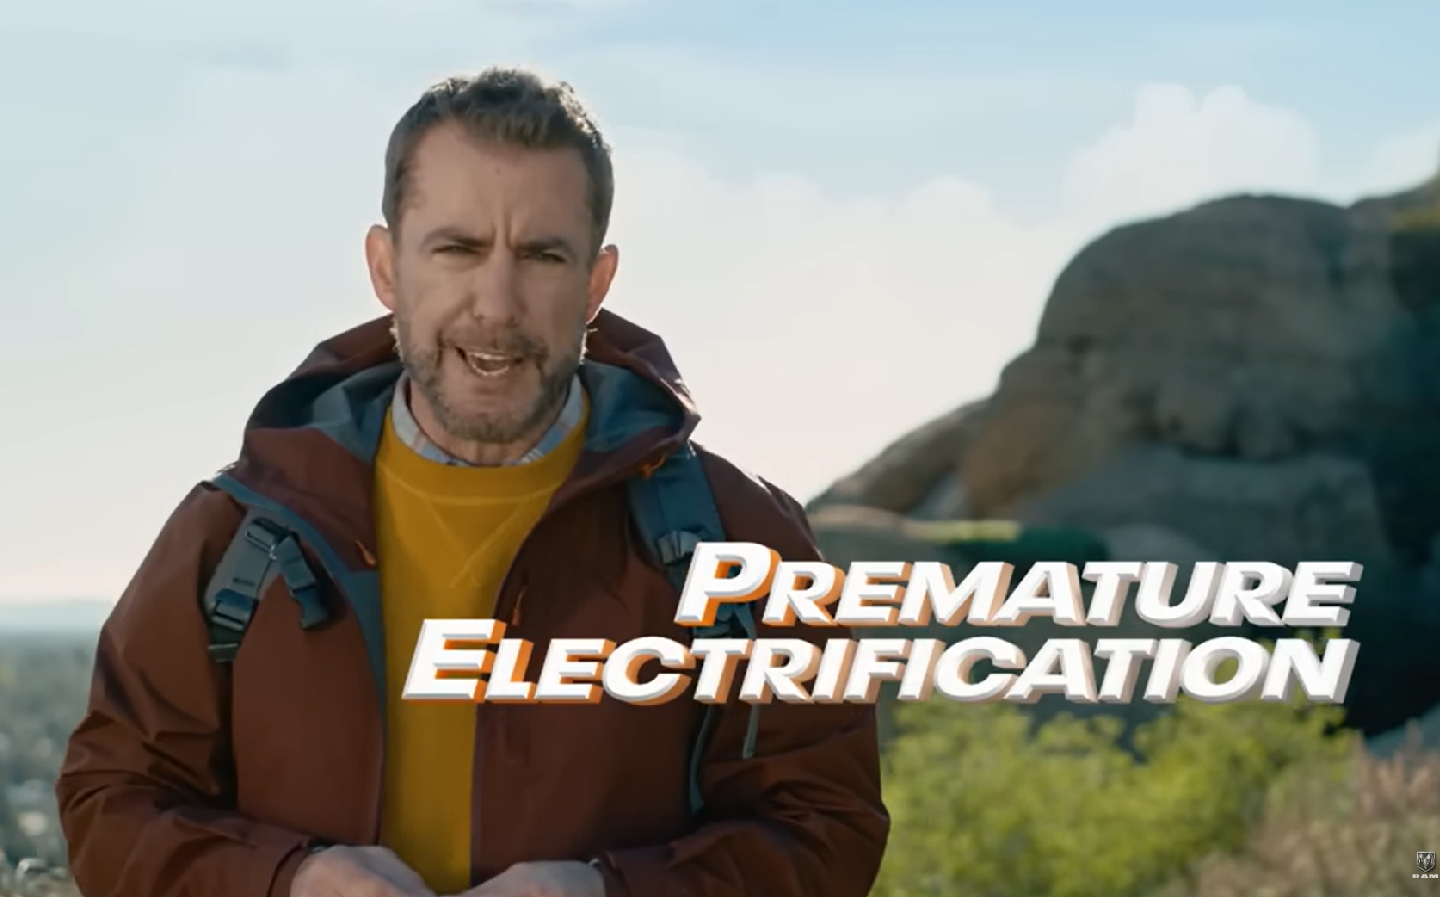 Ram Premature Electrification advert at Super Bowl LVII